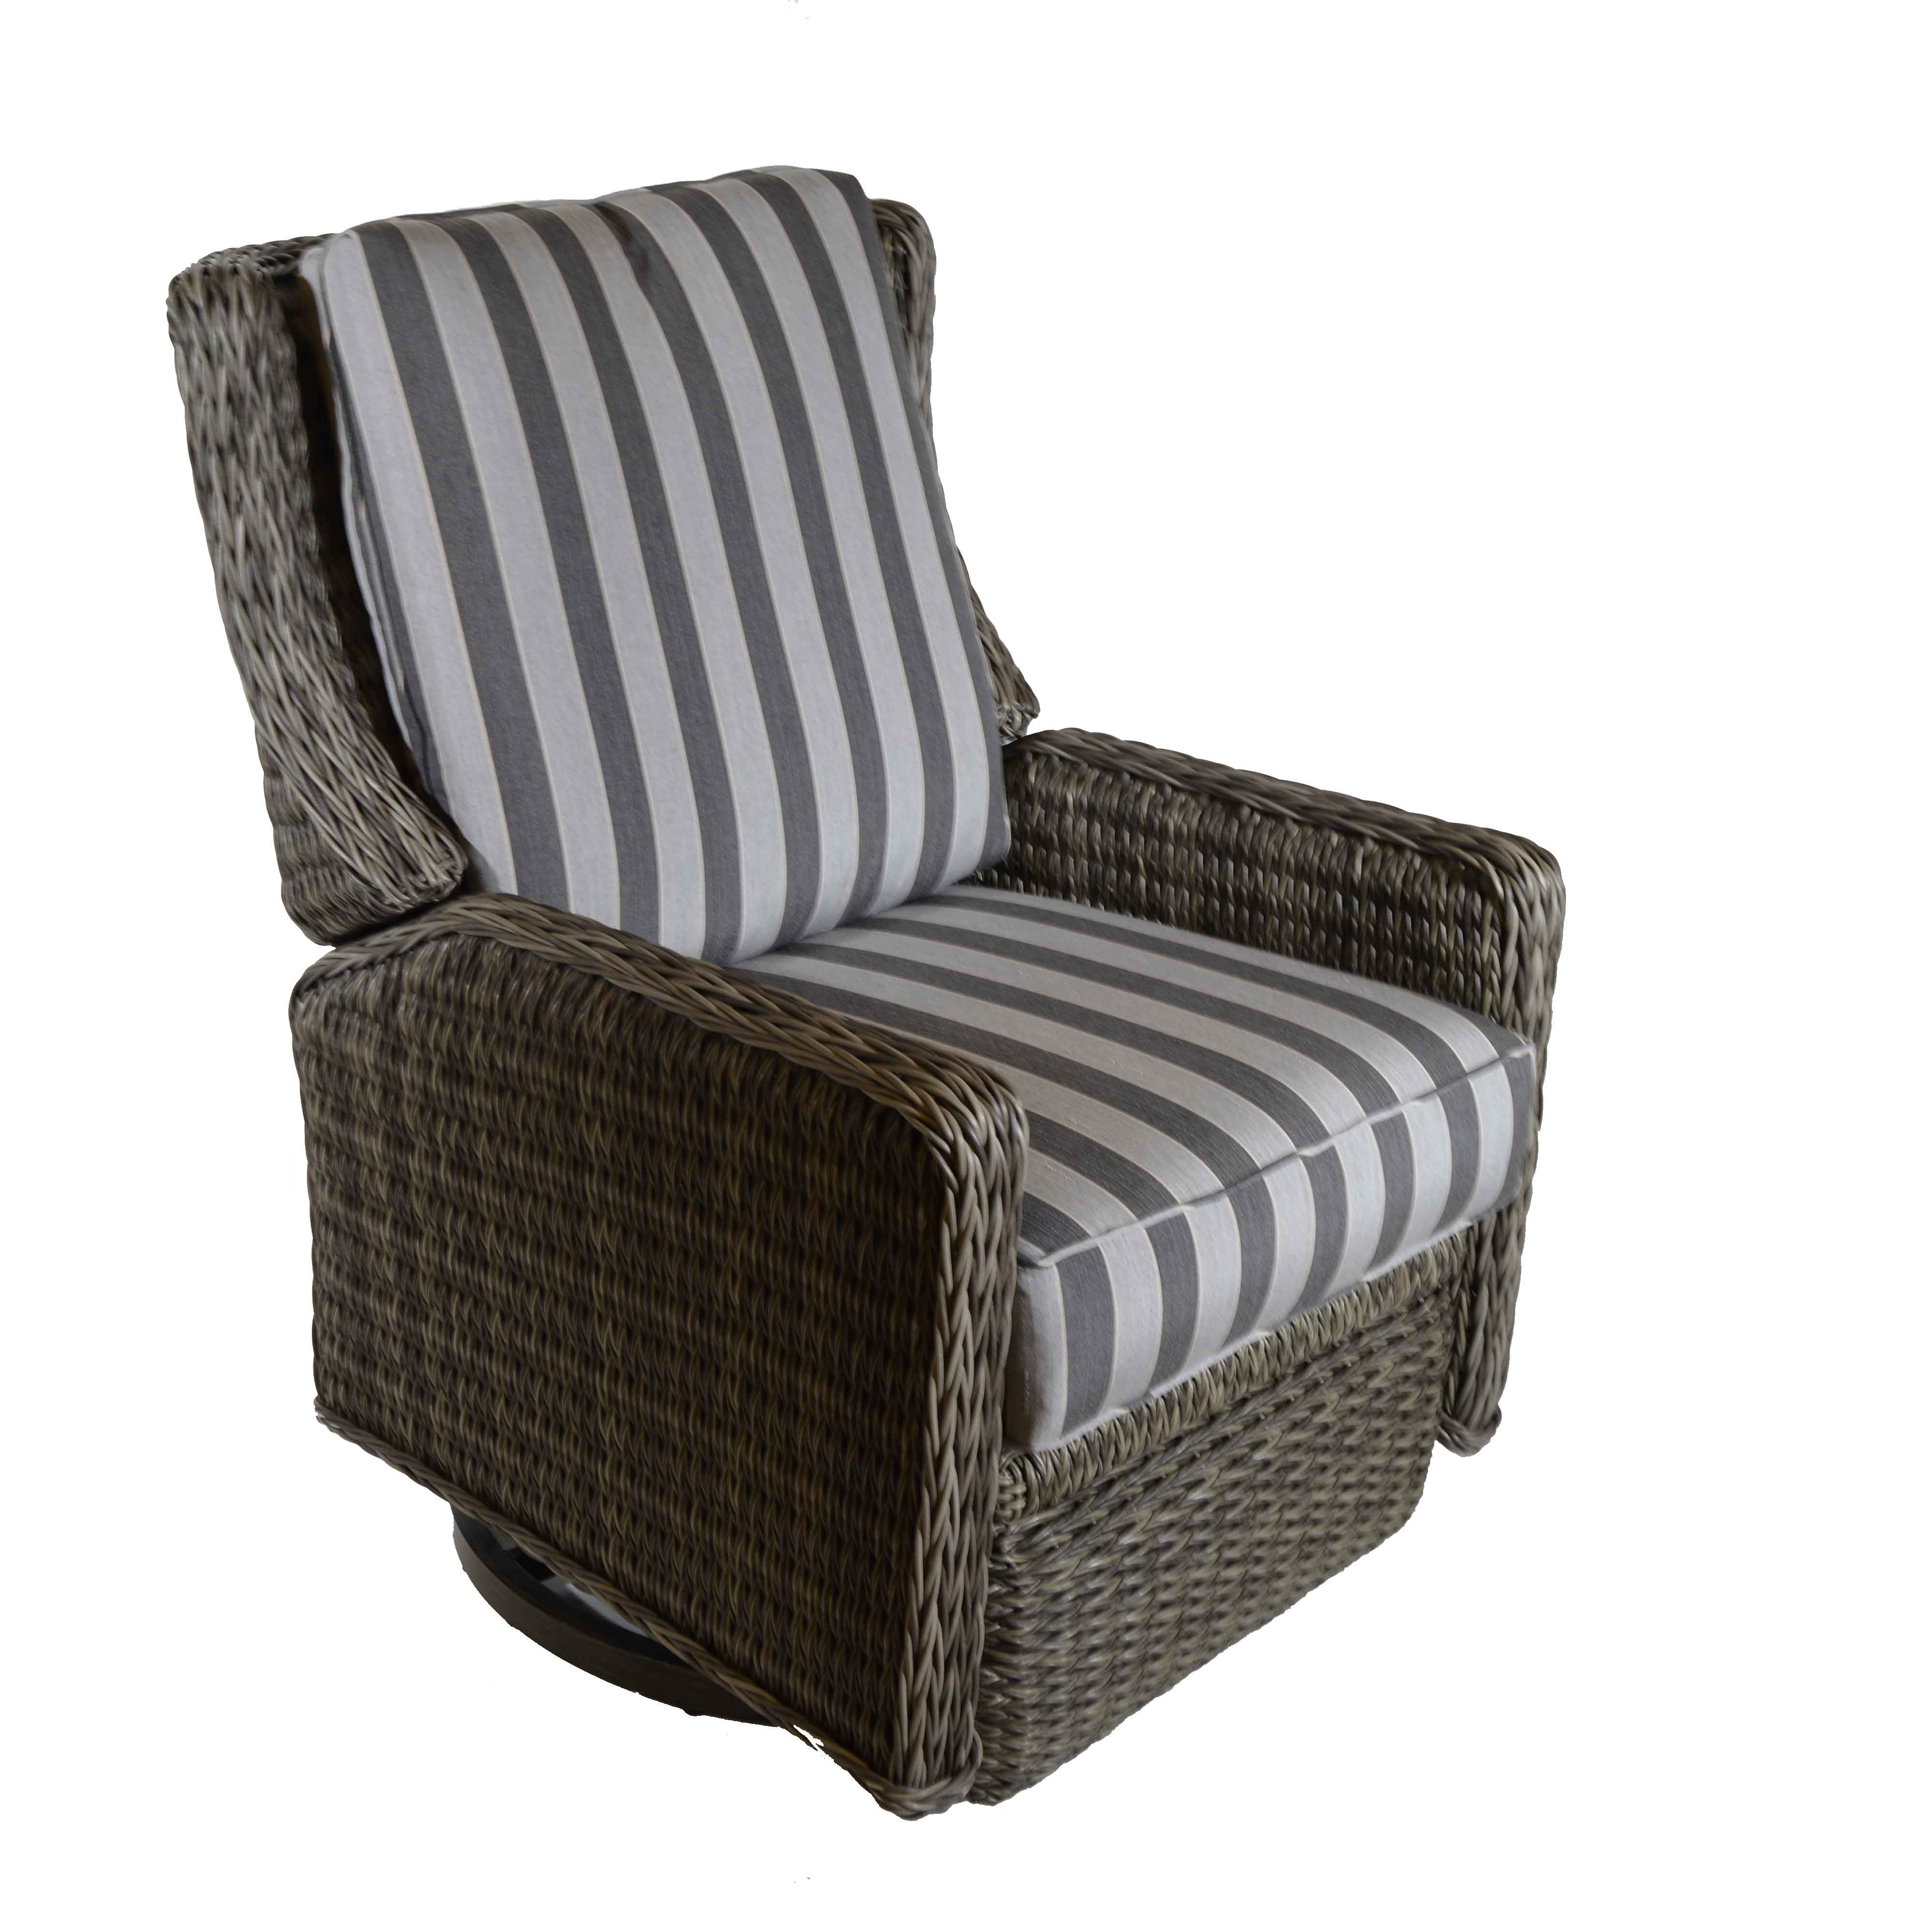 Ebel Geneva Woven Swivel Recliner Chair Camden Graphite within size 3995 X 3995